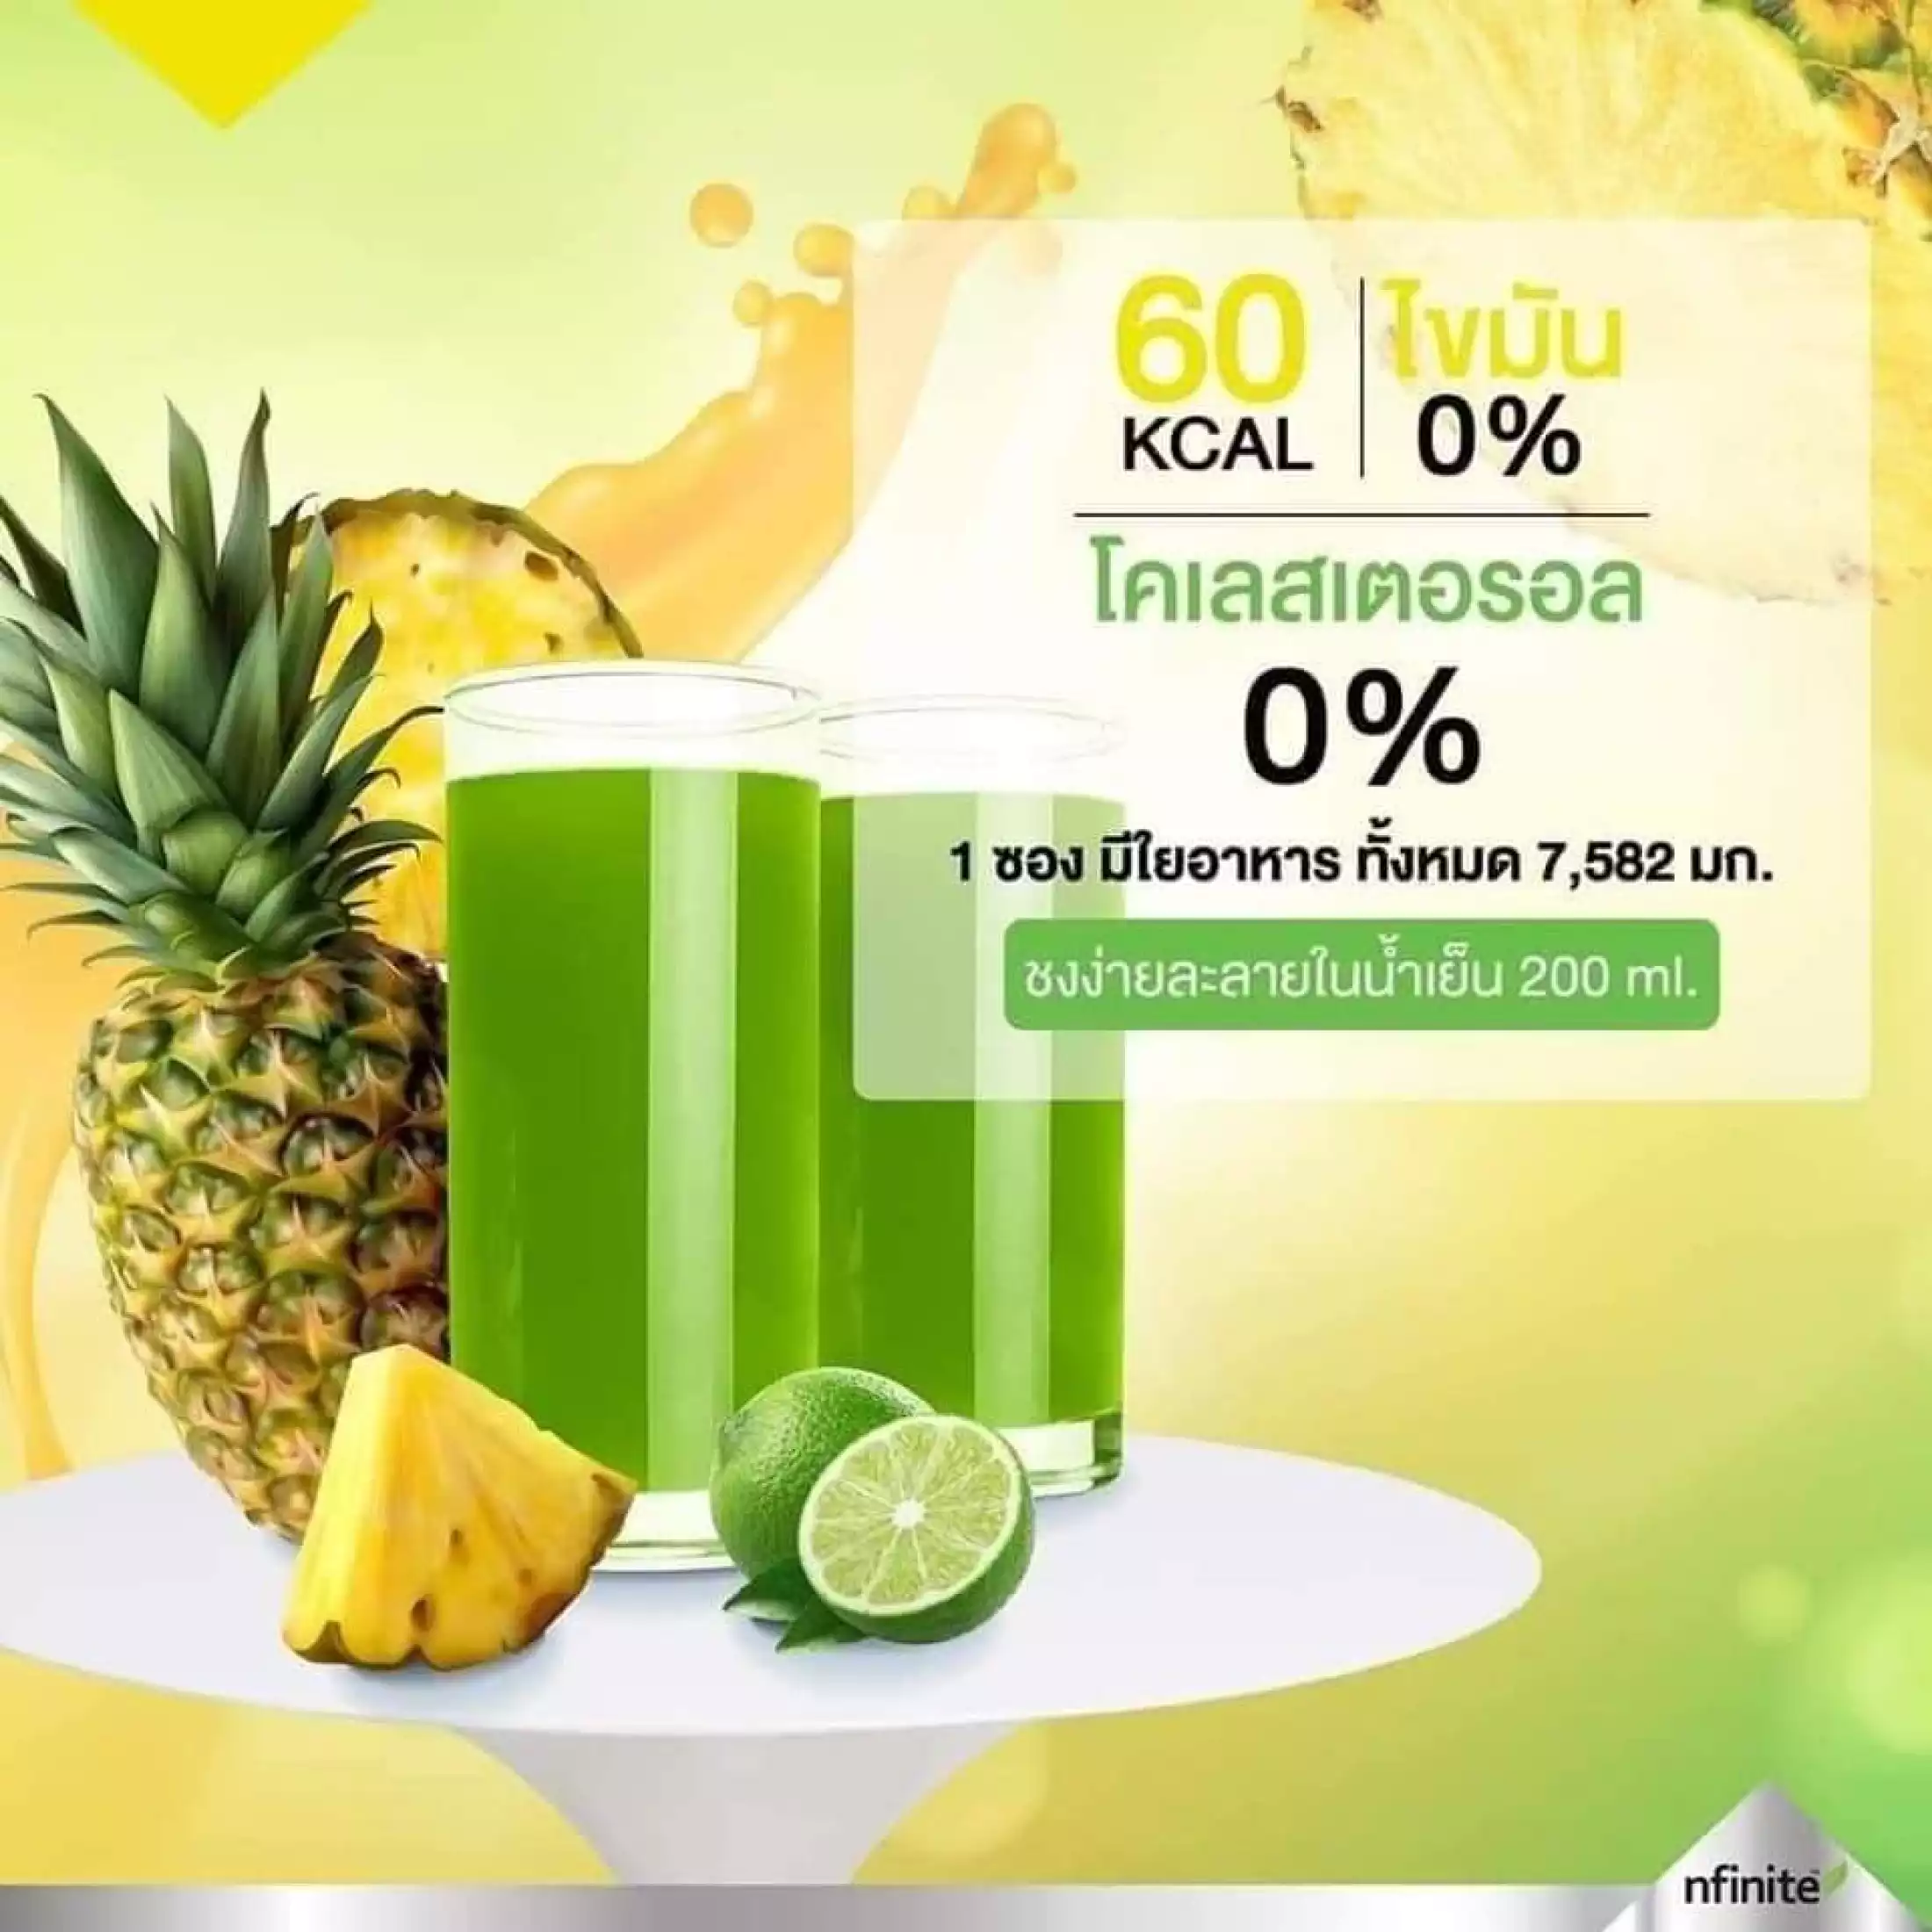 FLO Pineapple Lime 1 ͧ è 10 ͧ | Lazada.co.th